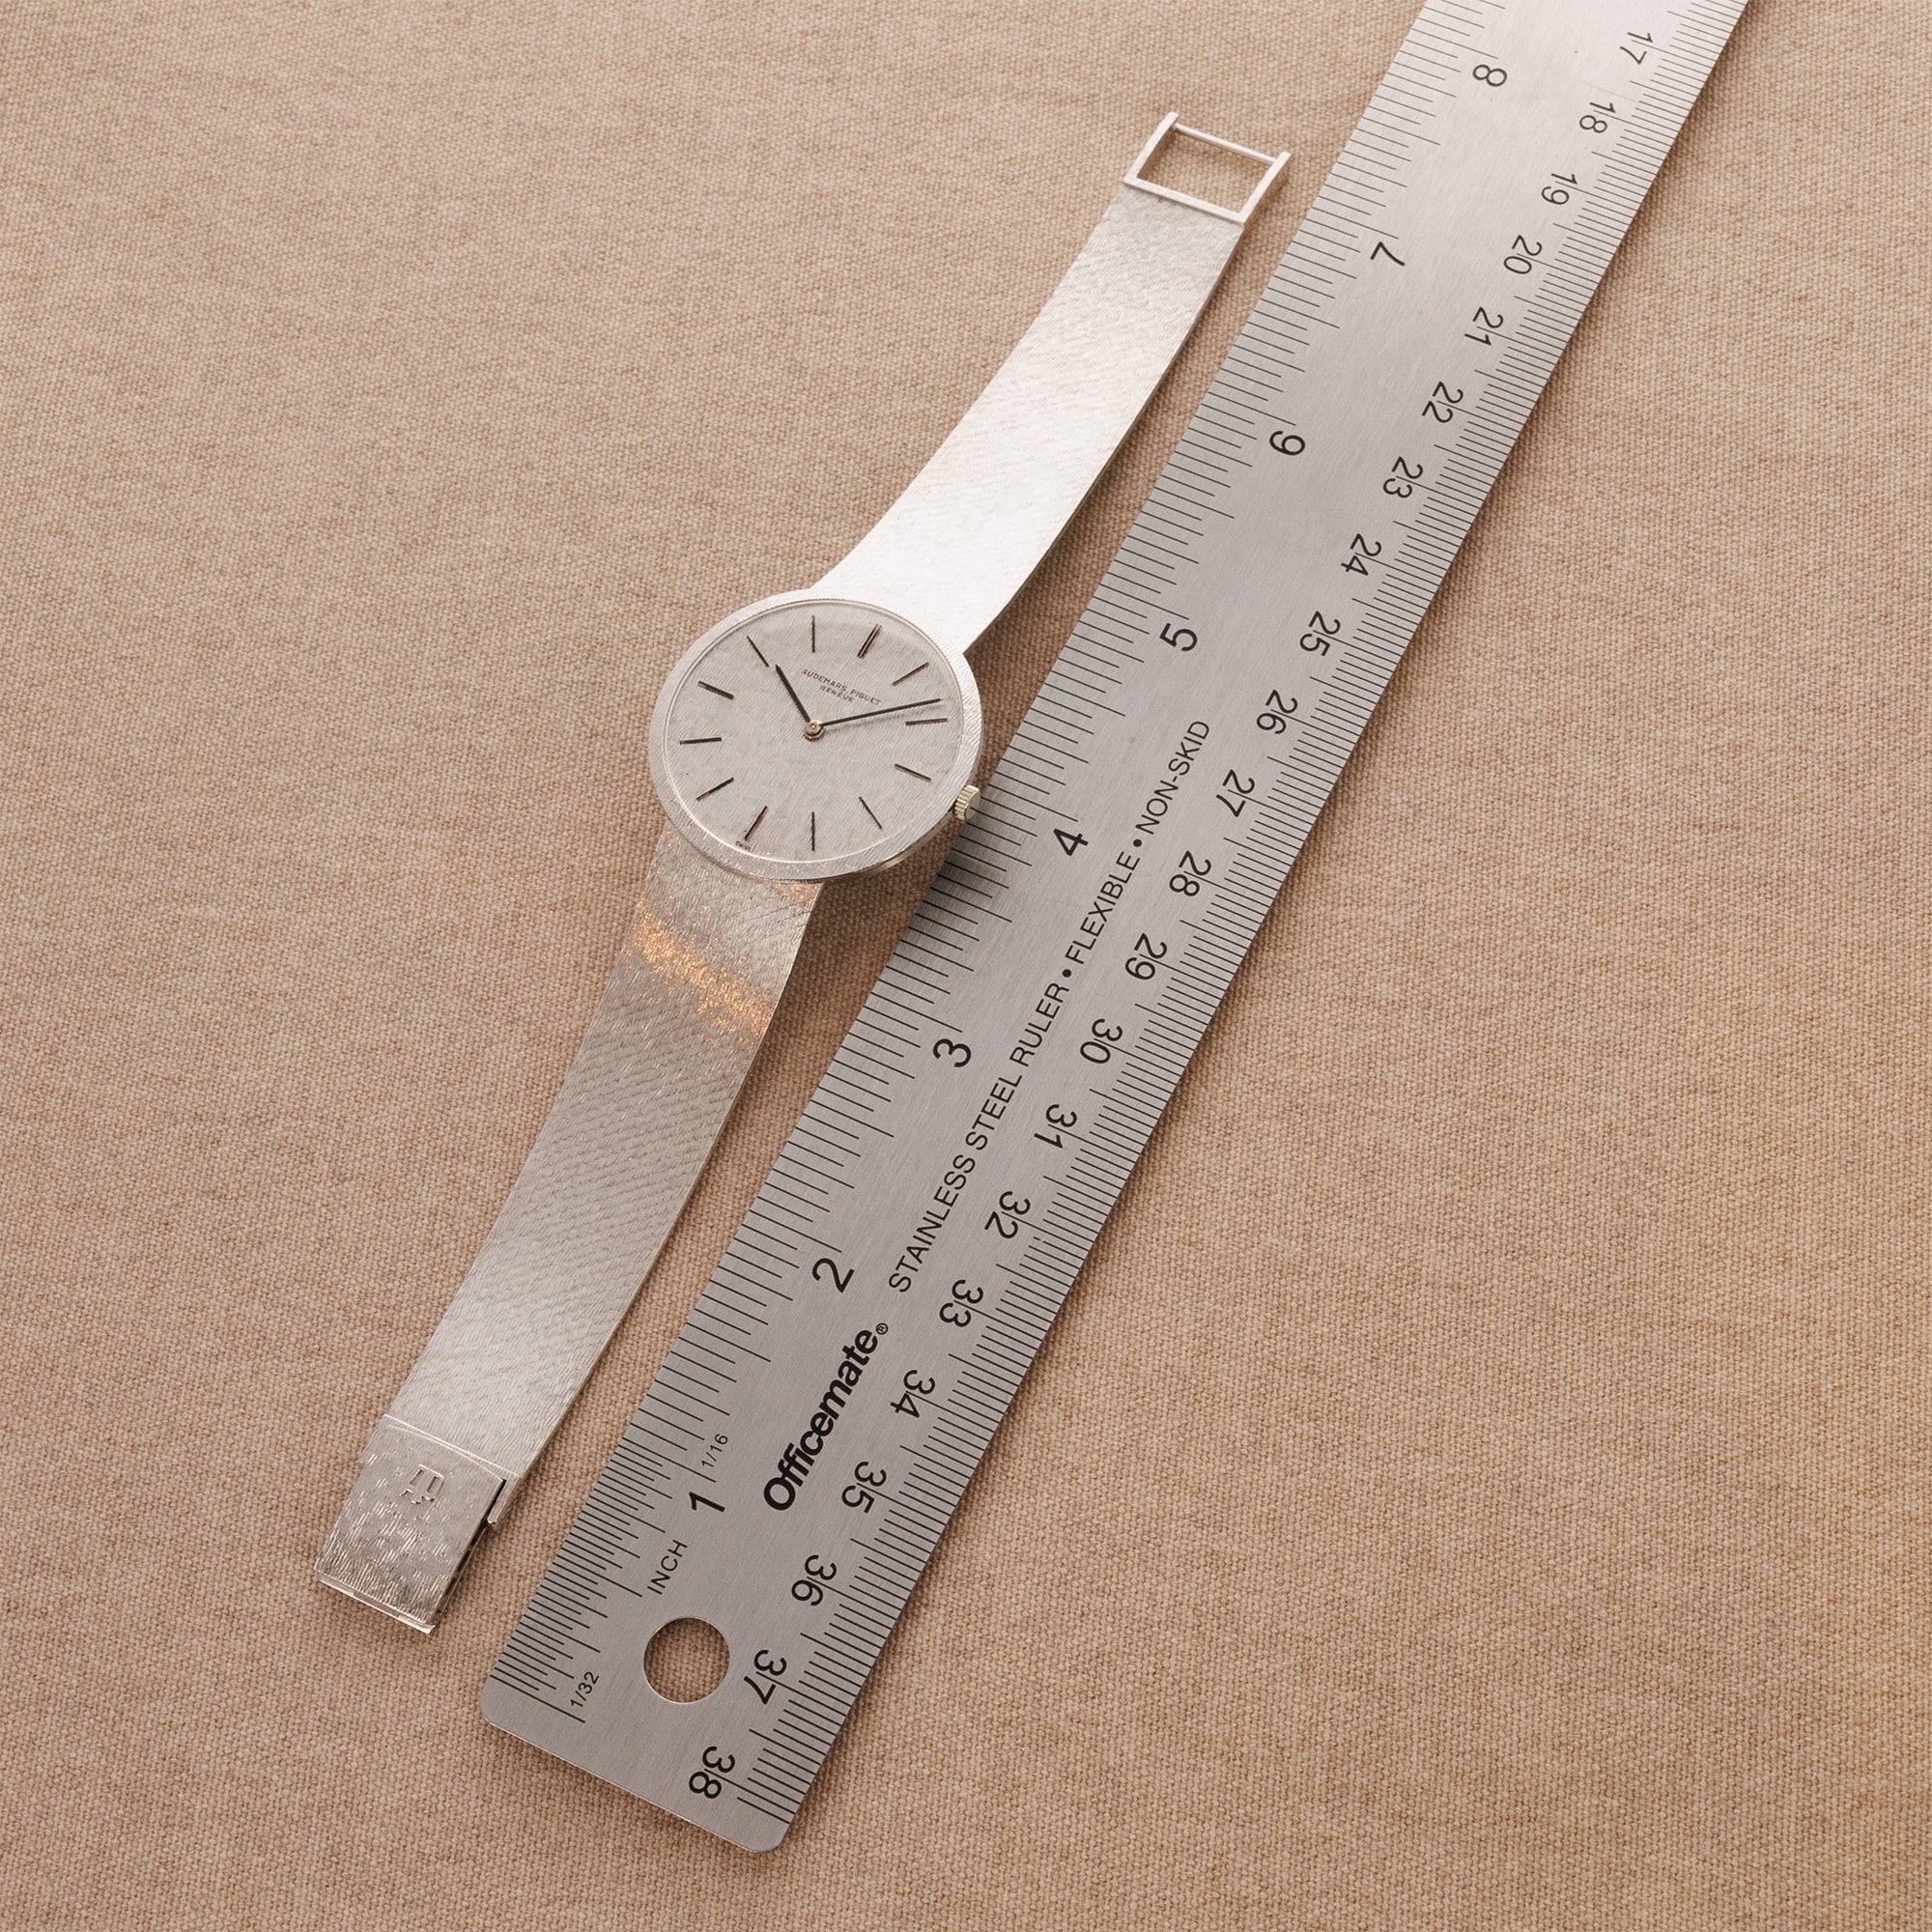 Audemars Piguet - Audemars Piguet White Gold Bracelet Watch Ref. 5266 - The Keystone Watches